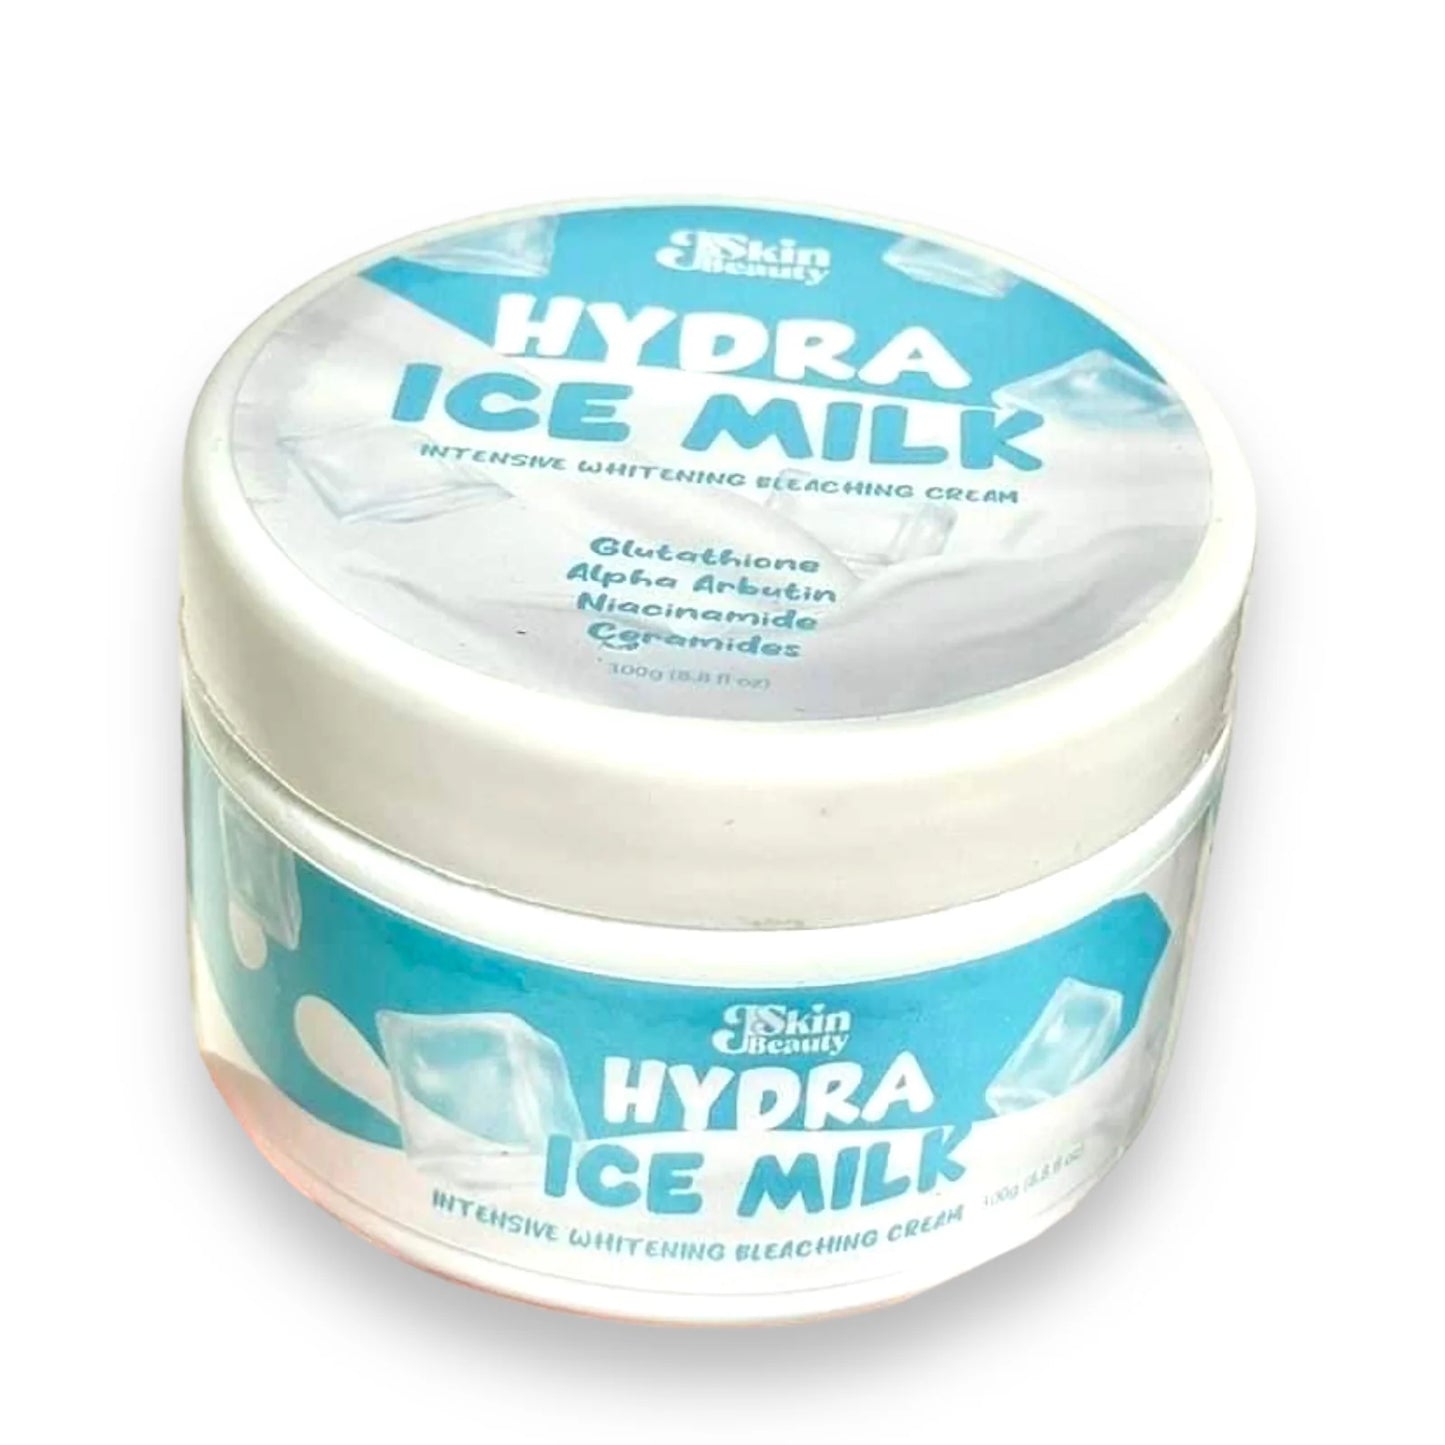 Hydra Ice Milk 300g